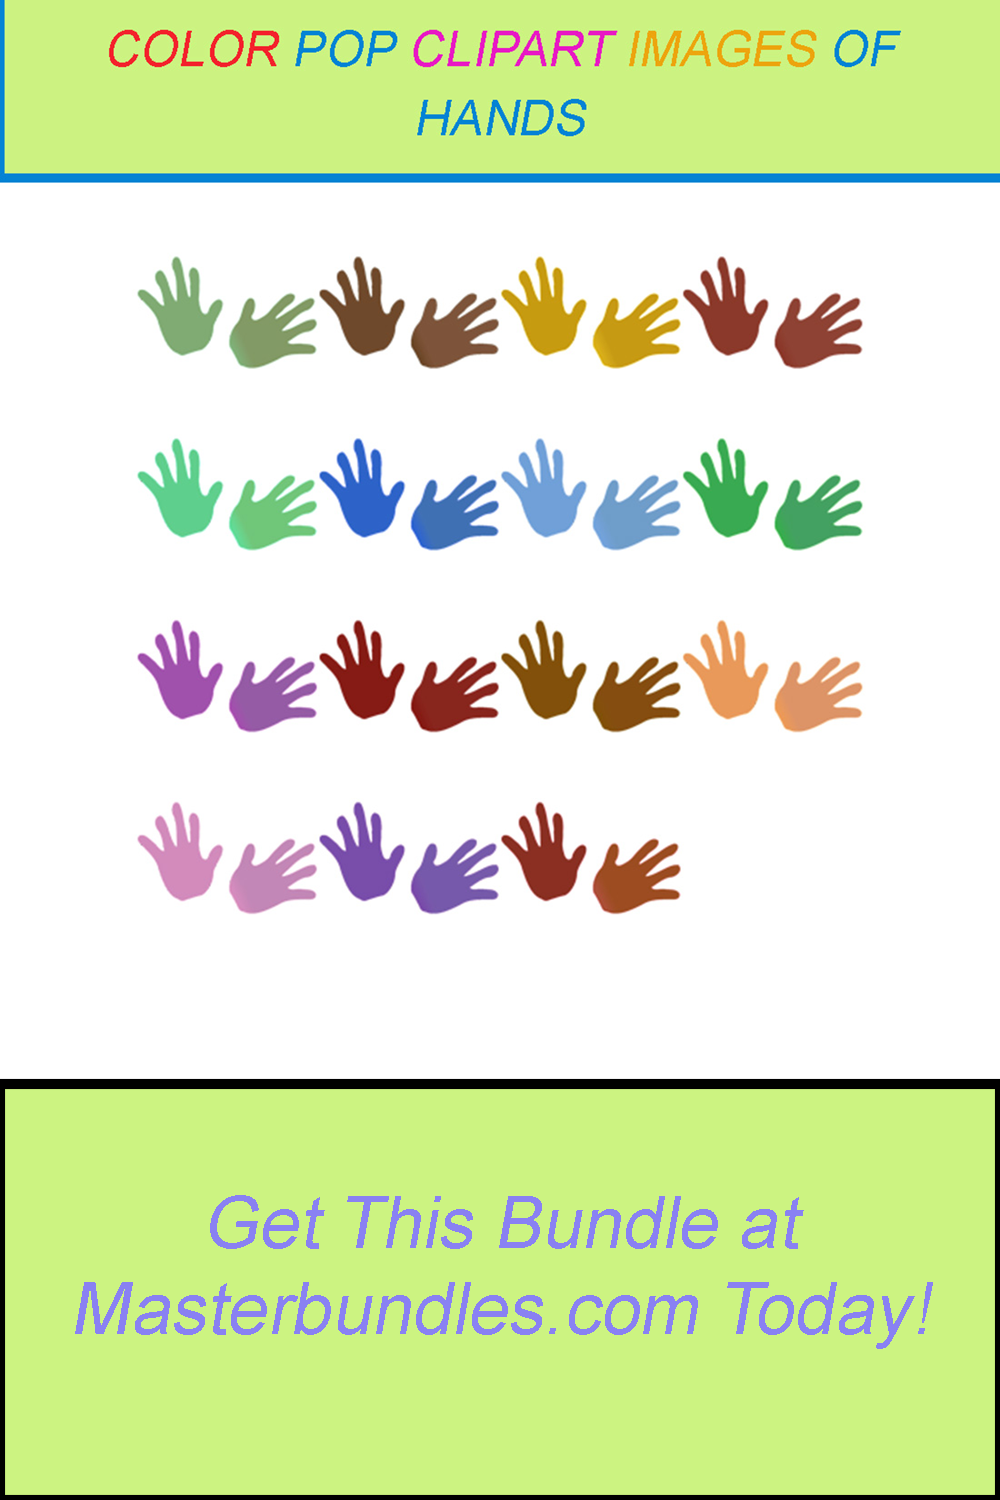 15 COLOR POP CLIPART IMAGES OF HANDS pinterest preview image.